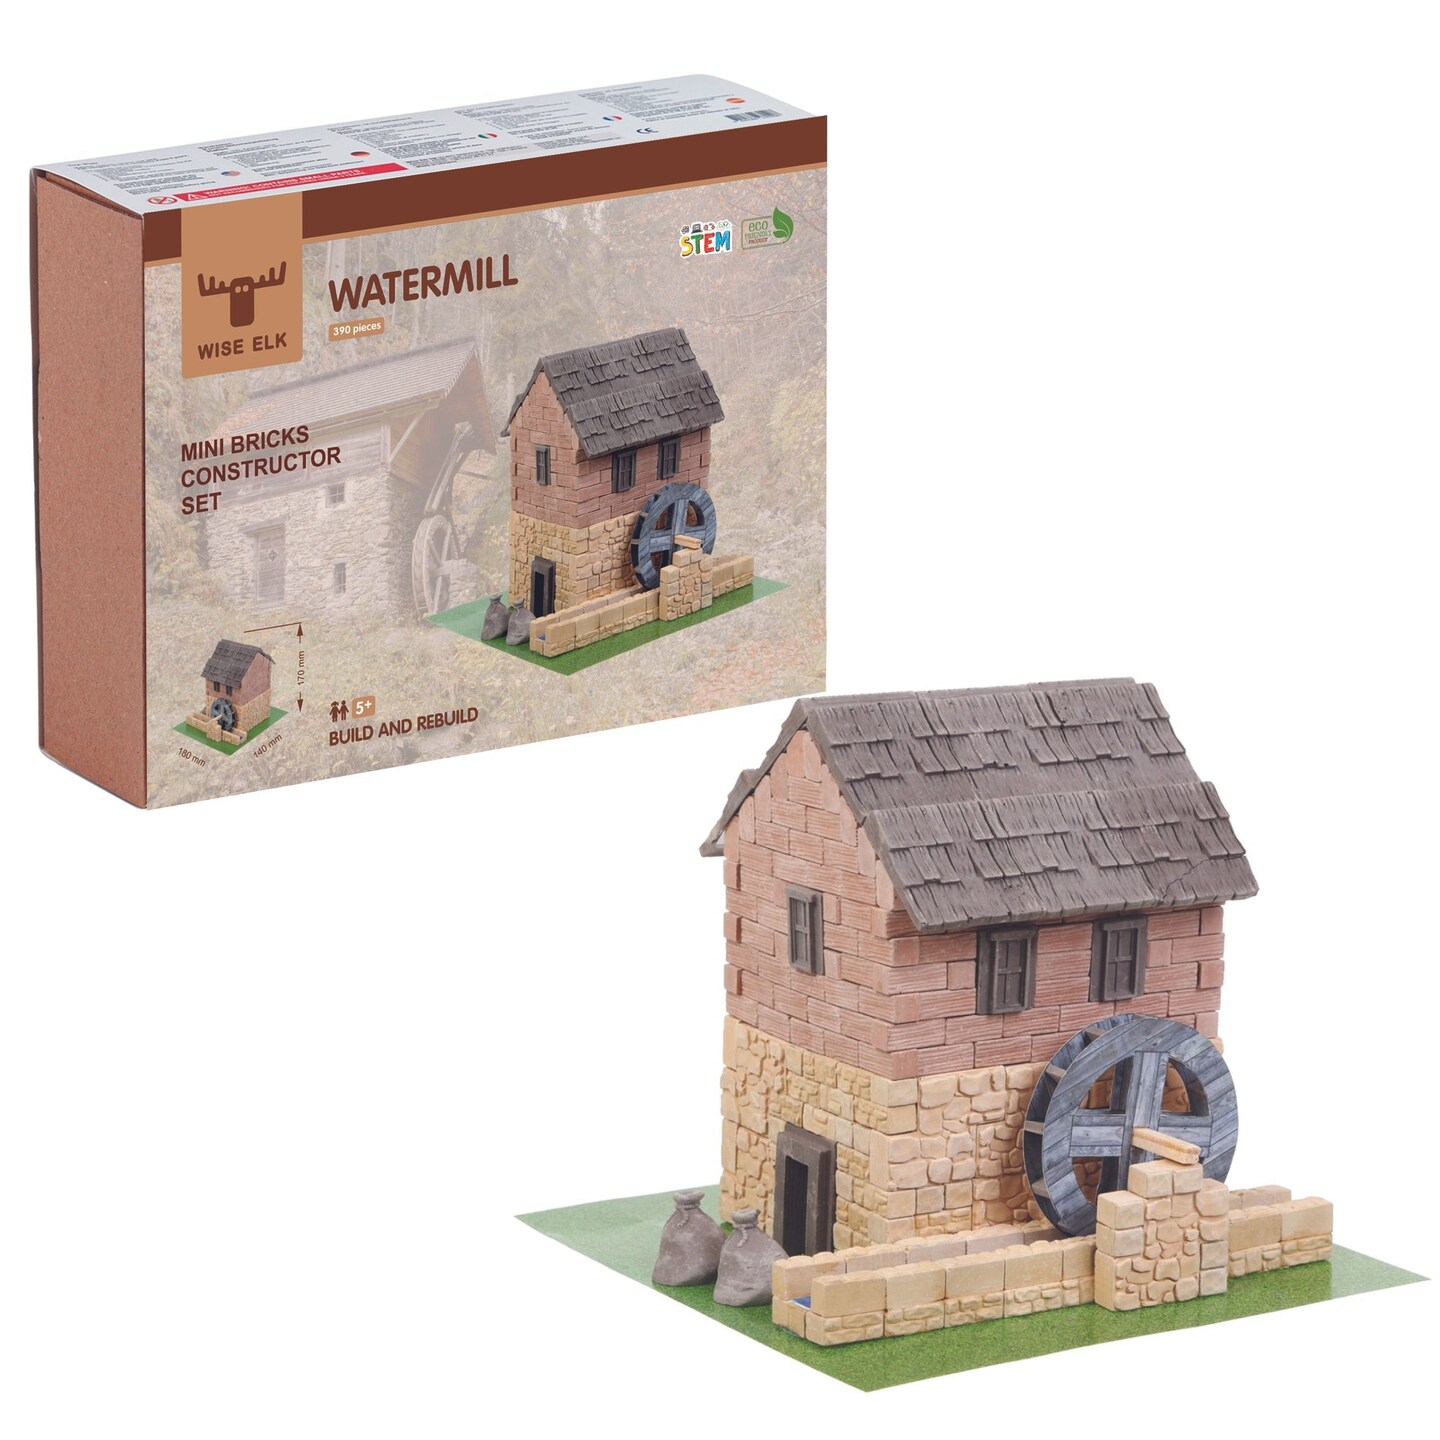 How to Make Mini Bricks for Model House, Miniature Bricks